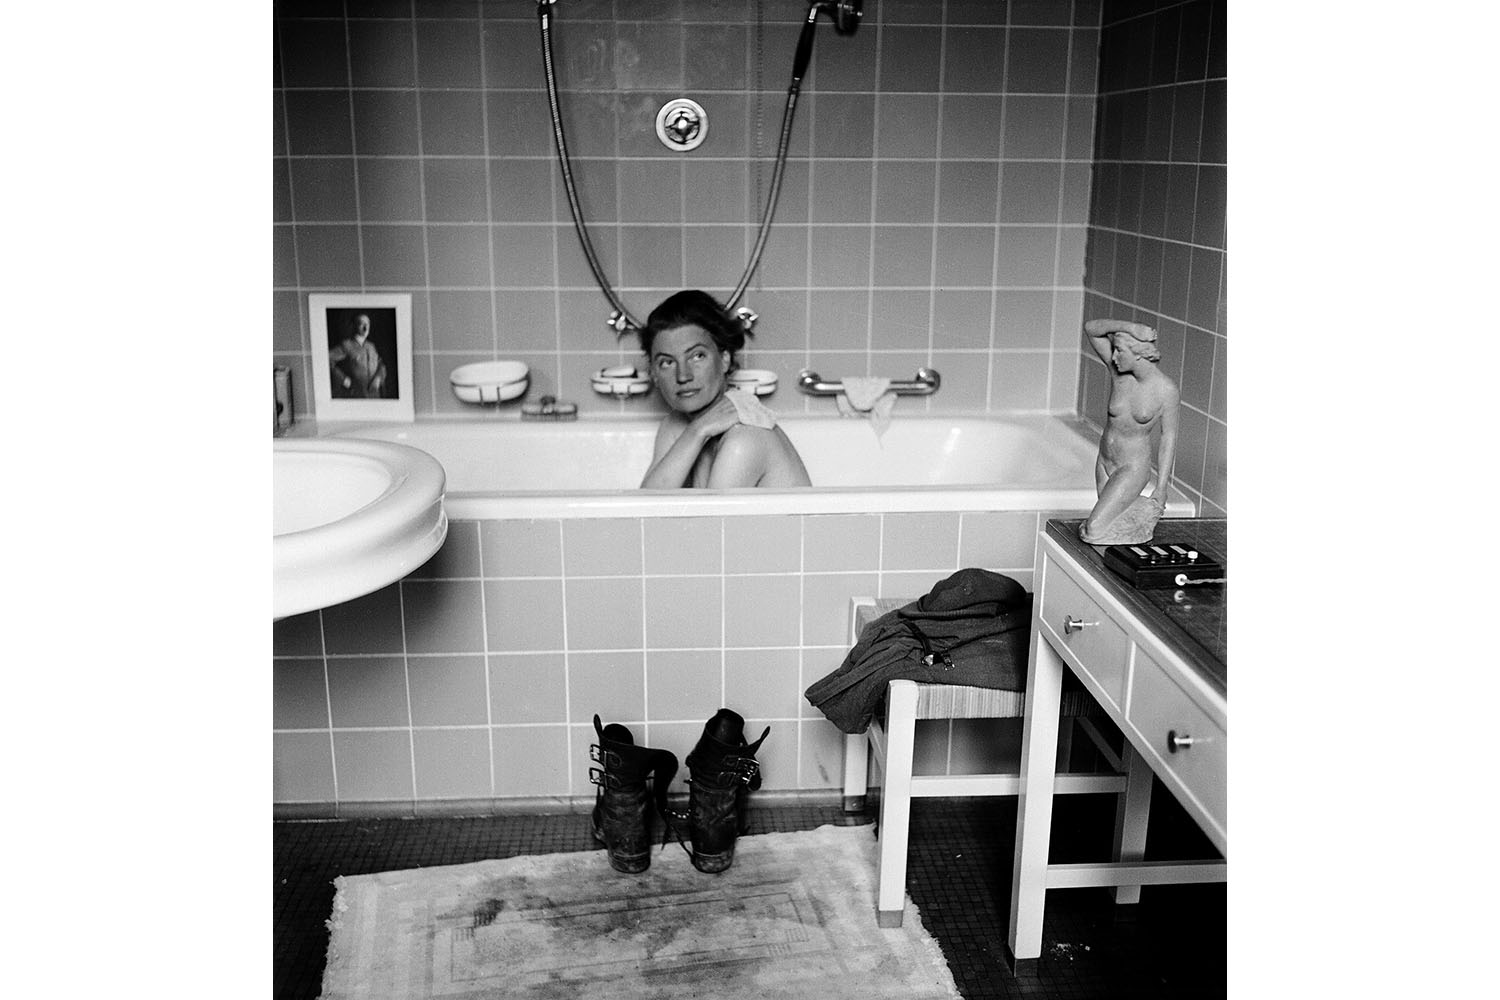 Lee Miller in Hitler's bath,Hitler's apartment